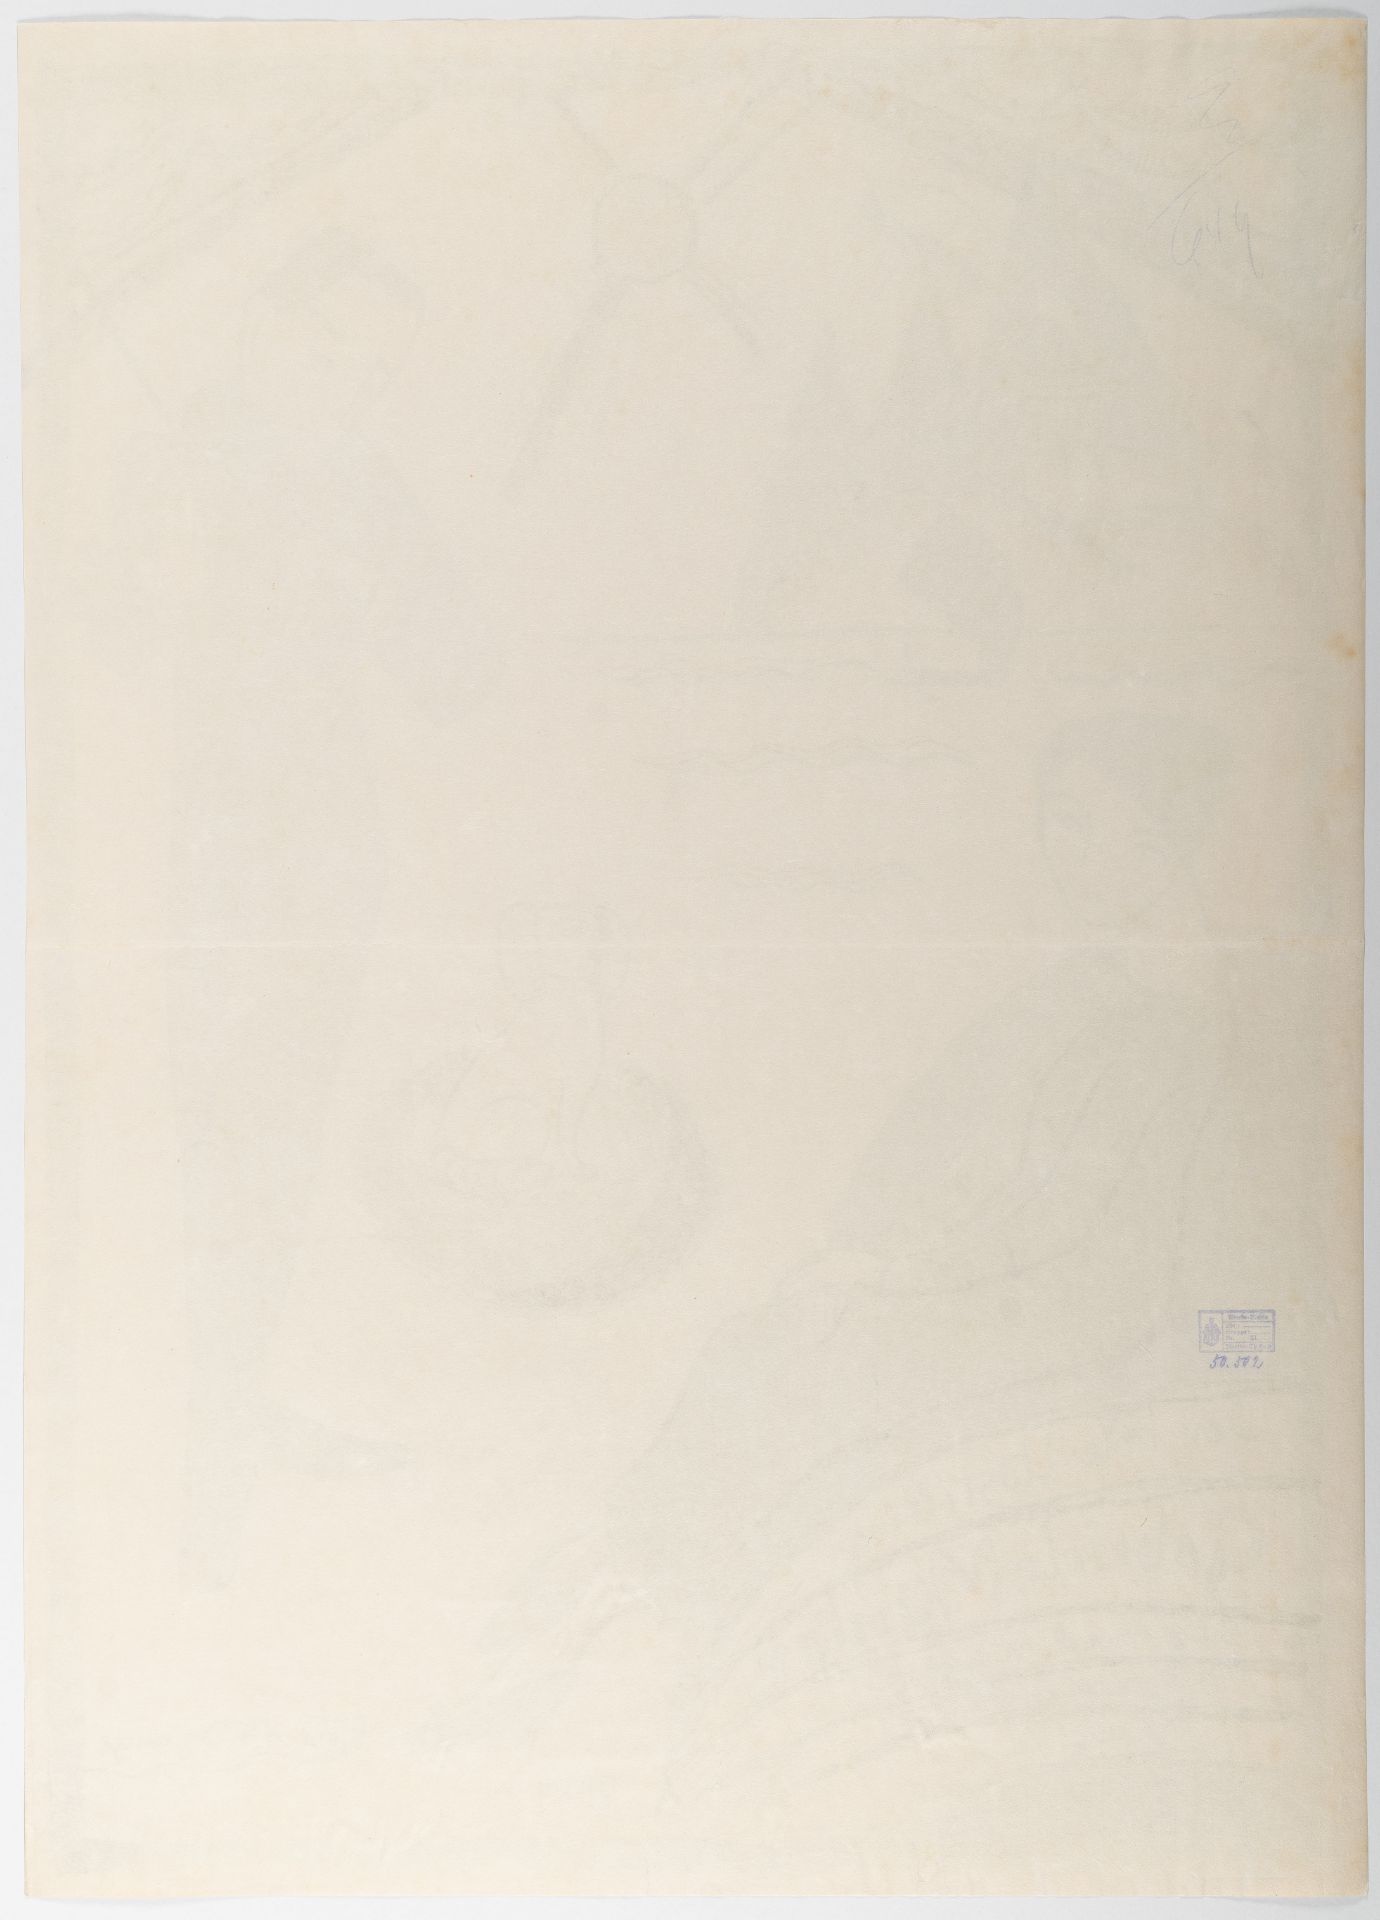 Gabriele Münter (1877 Berlin - Murnau 1962) – Poster for the Gabriele Münter exhibition Copenhagen. - Image 3 of 3